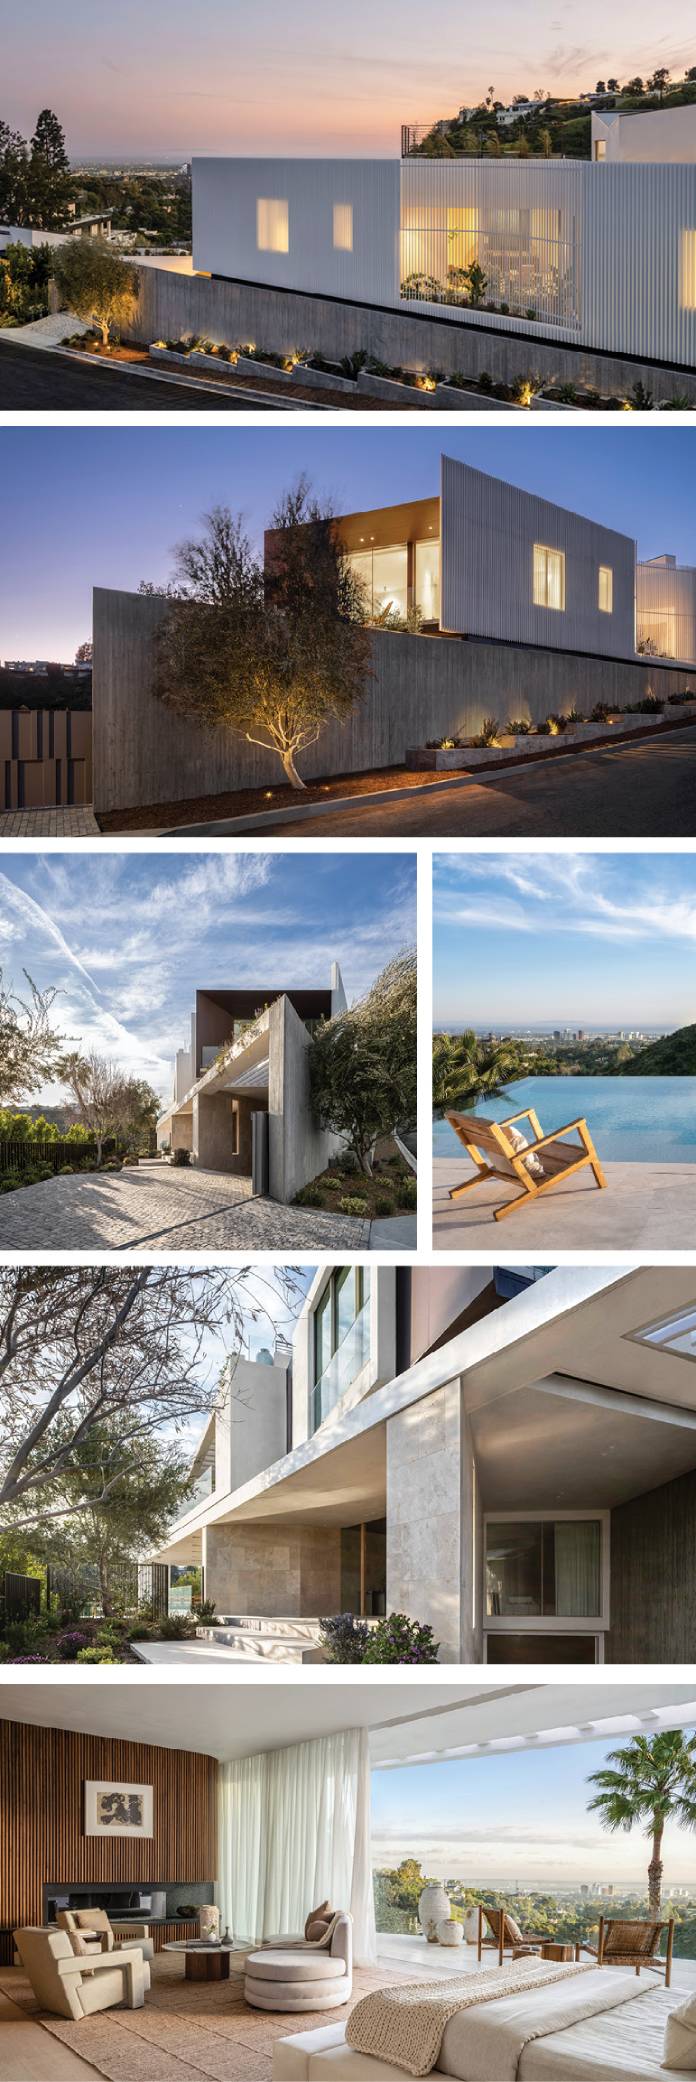 Bel Air residence by Cape Town’s SAOTA, US architect developer David Maman, and Belgian interior designer Dieter Vander Velpen.